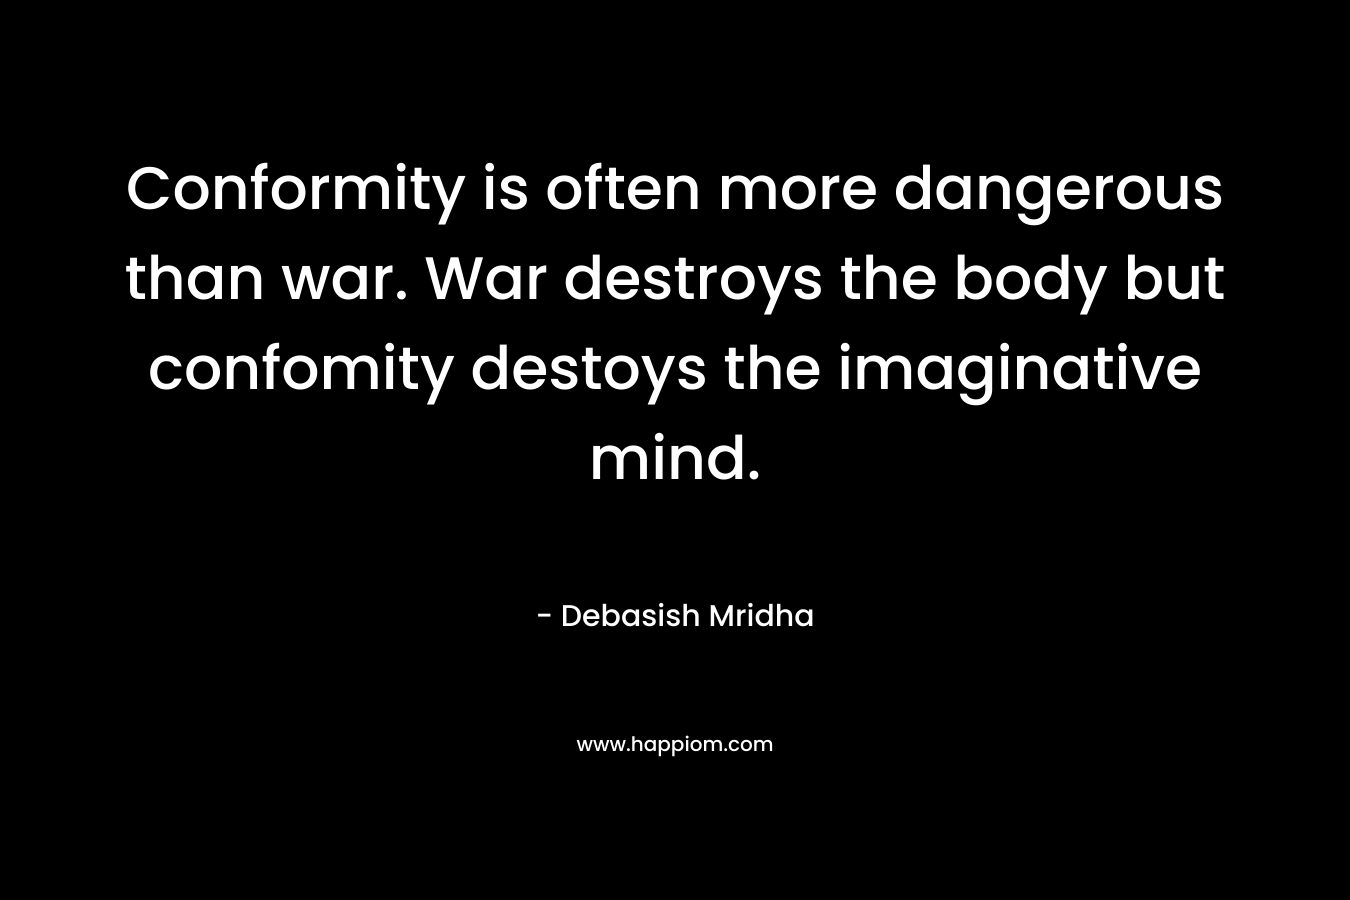 Conformity is often more dangerous than war. War destroys the body but confomity destoys the imaginative mind. – Debasish Mridha